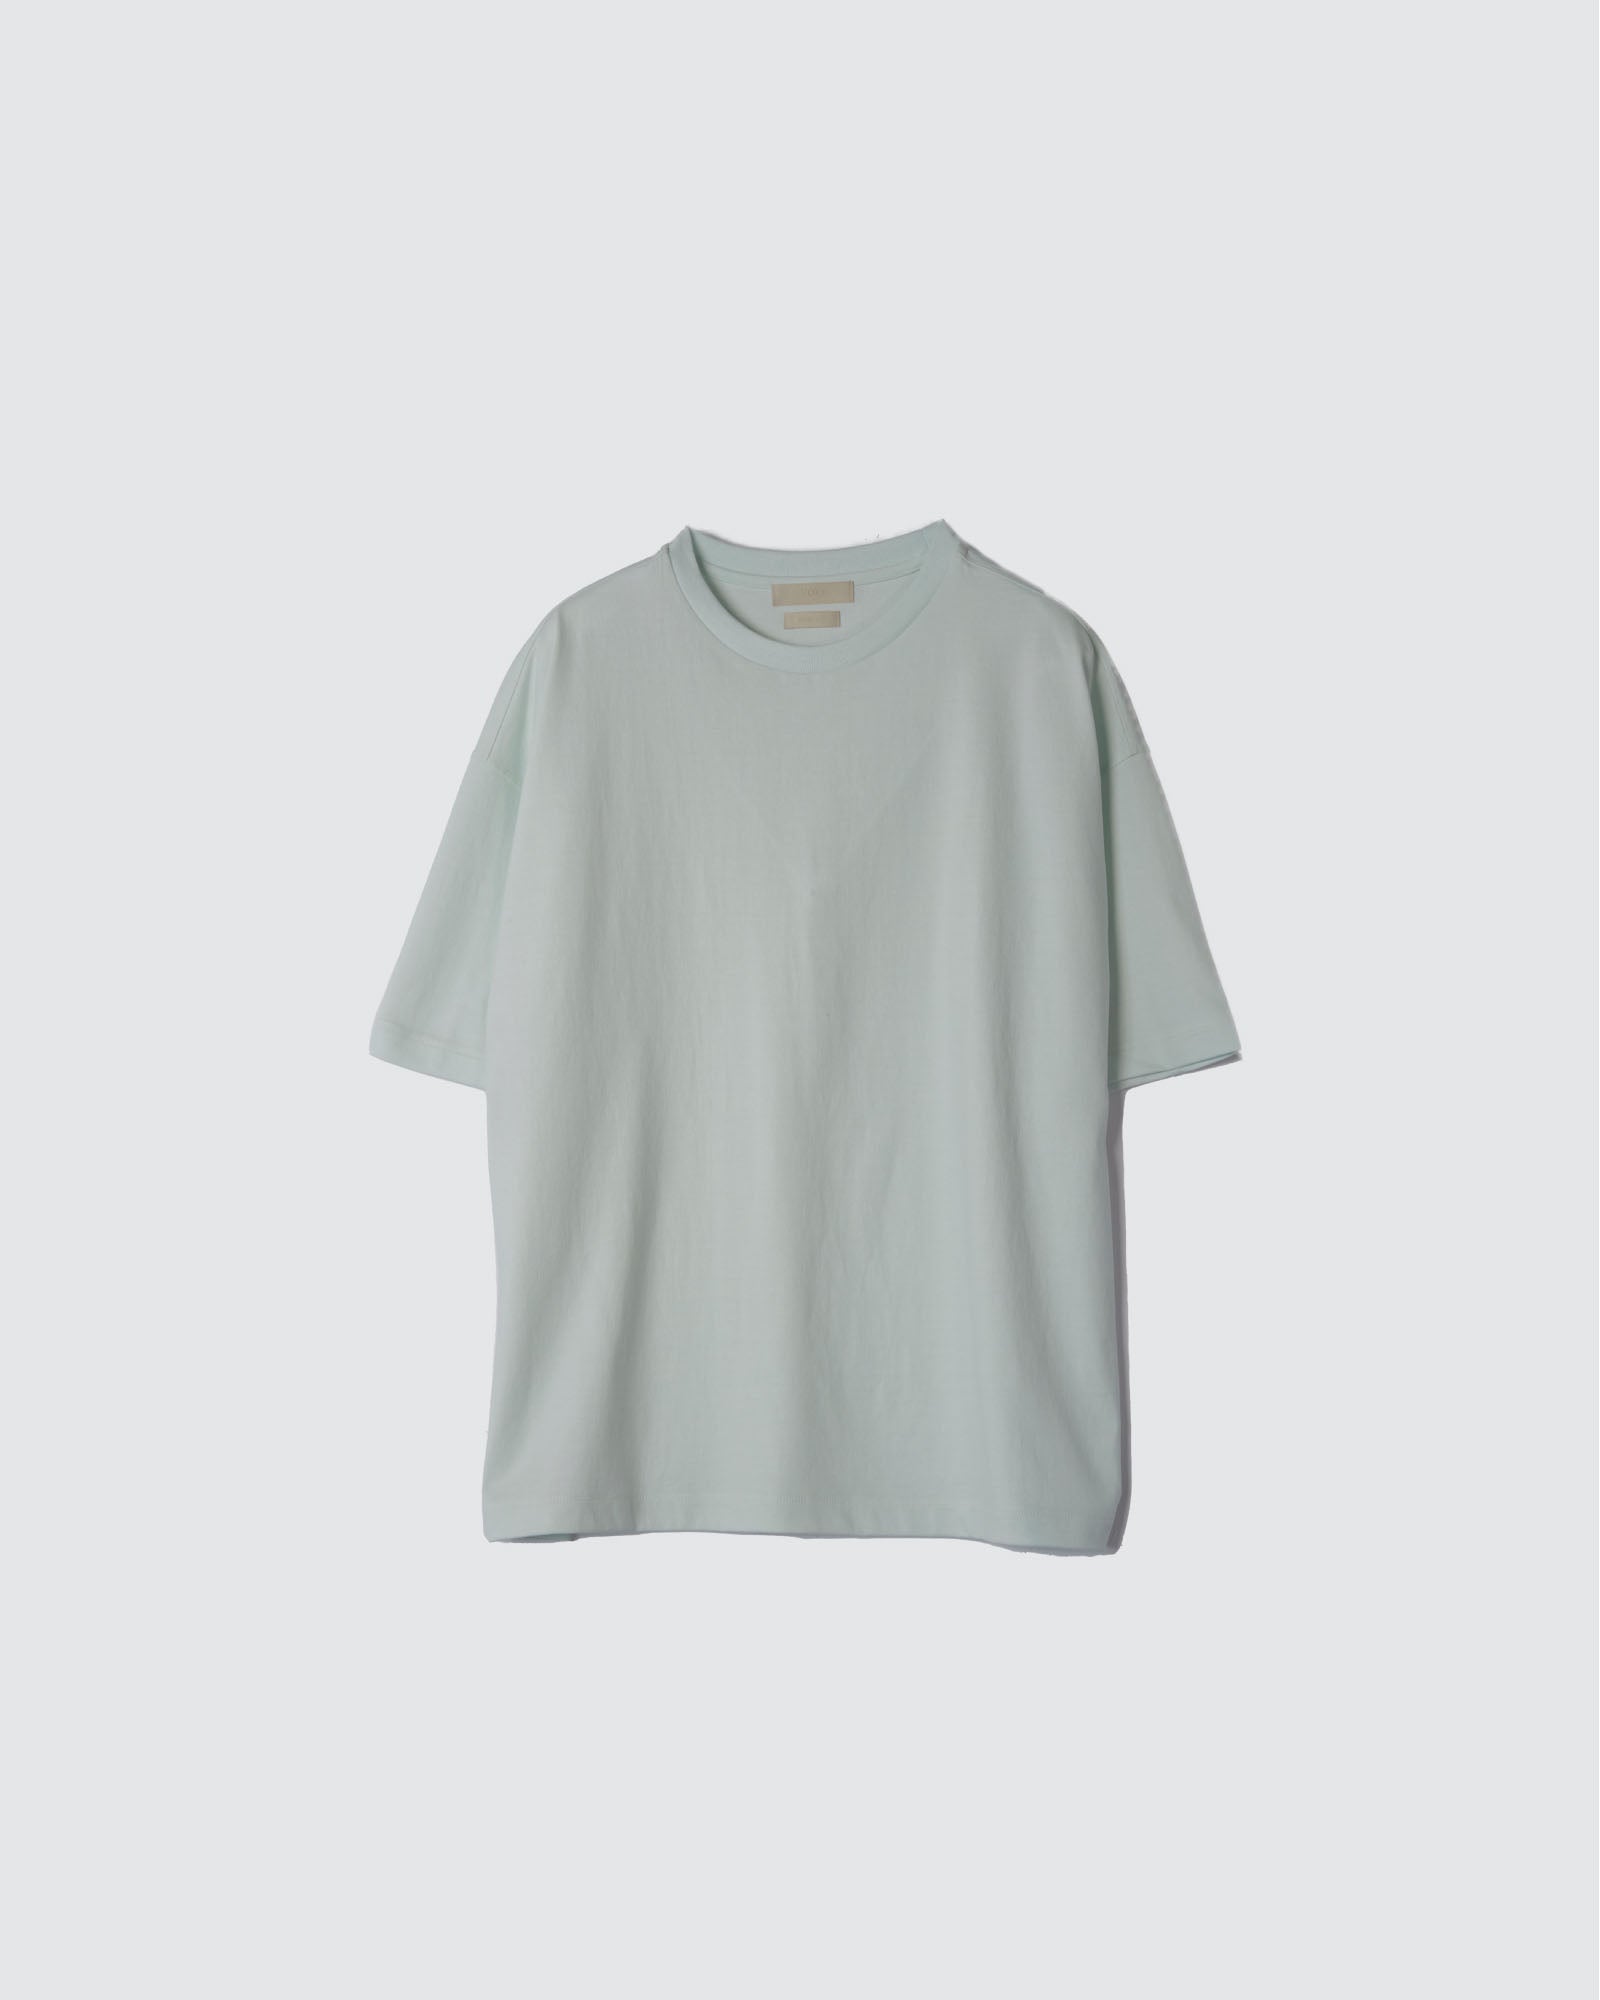 YOKE T-SHIRT MIST GREEN ヨーク Tシャツ stein